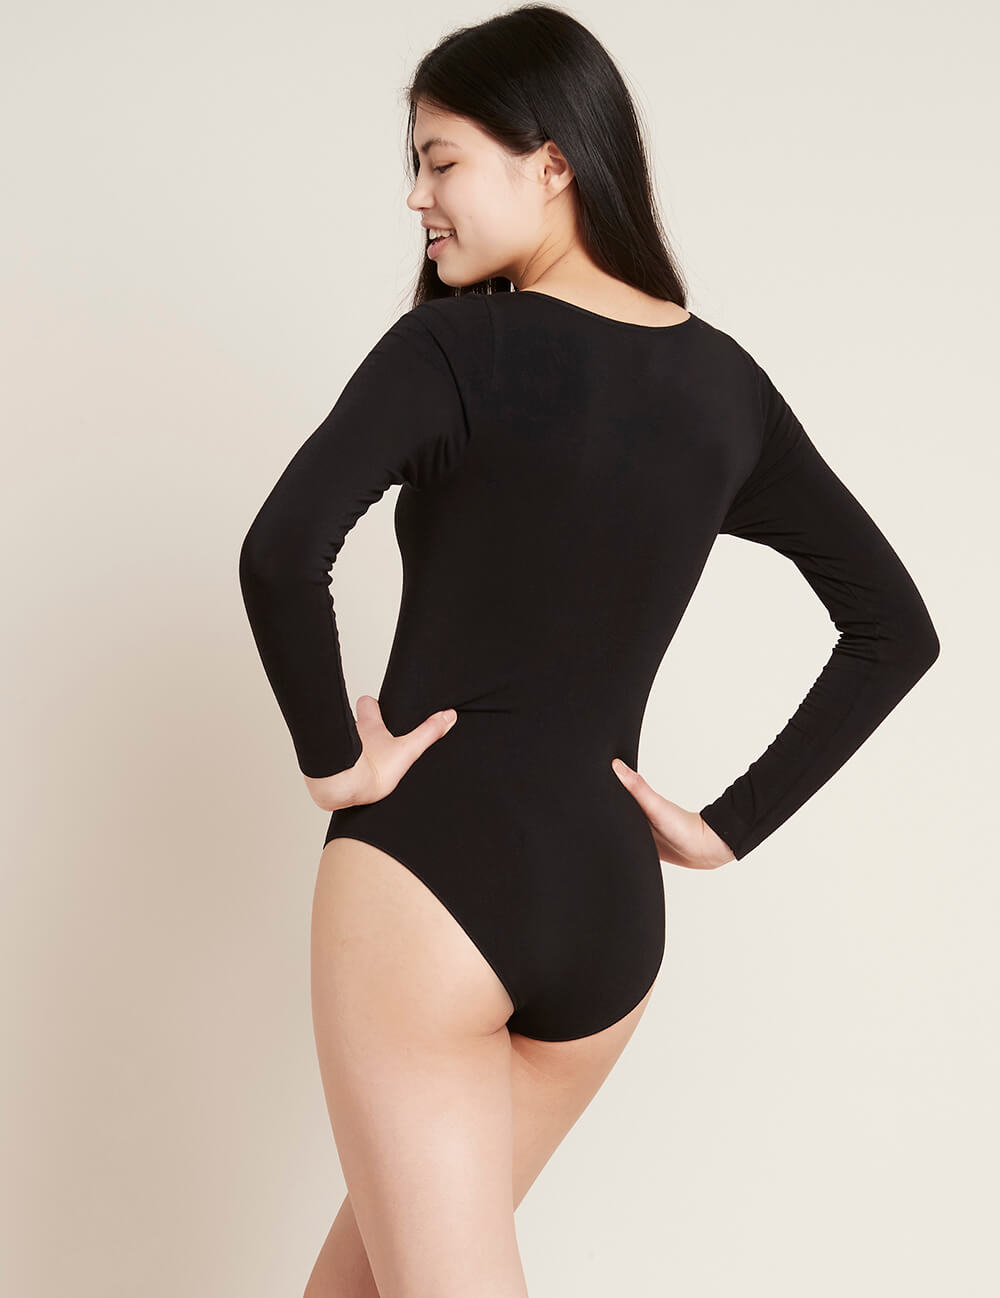 Boody Bamboo Women's Long Sleeve Bodysuit in Black Back View